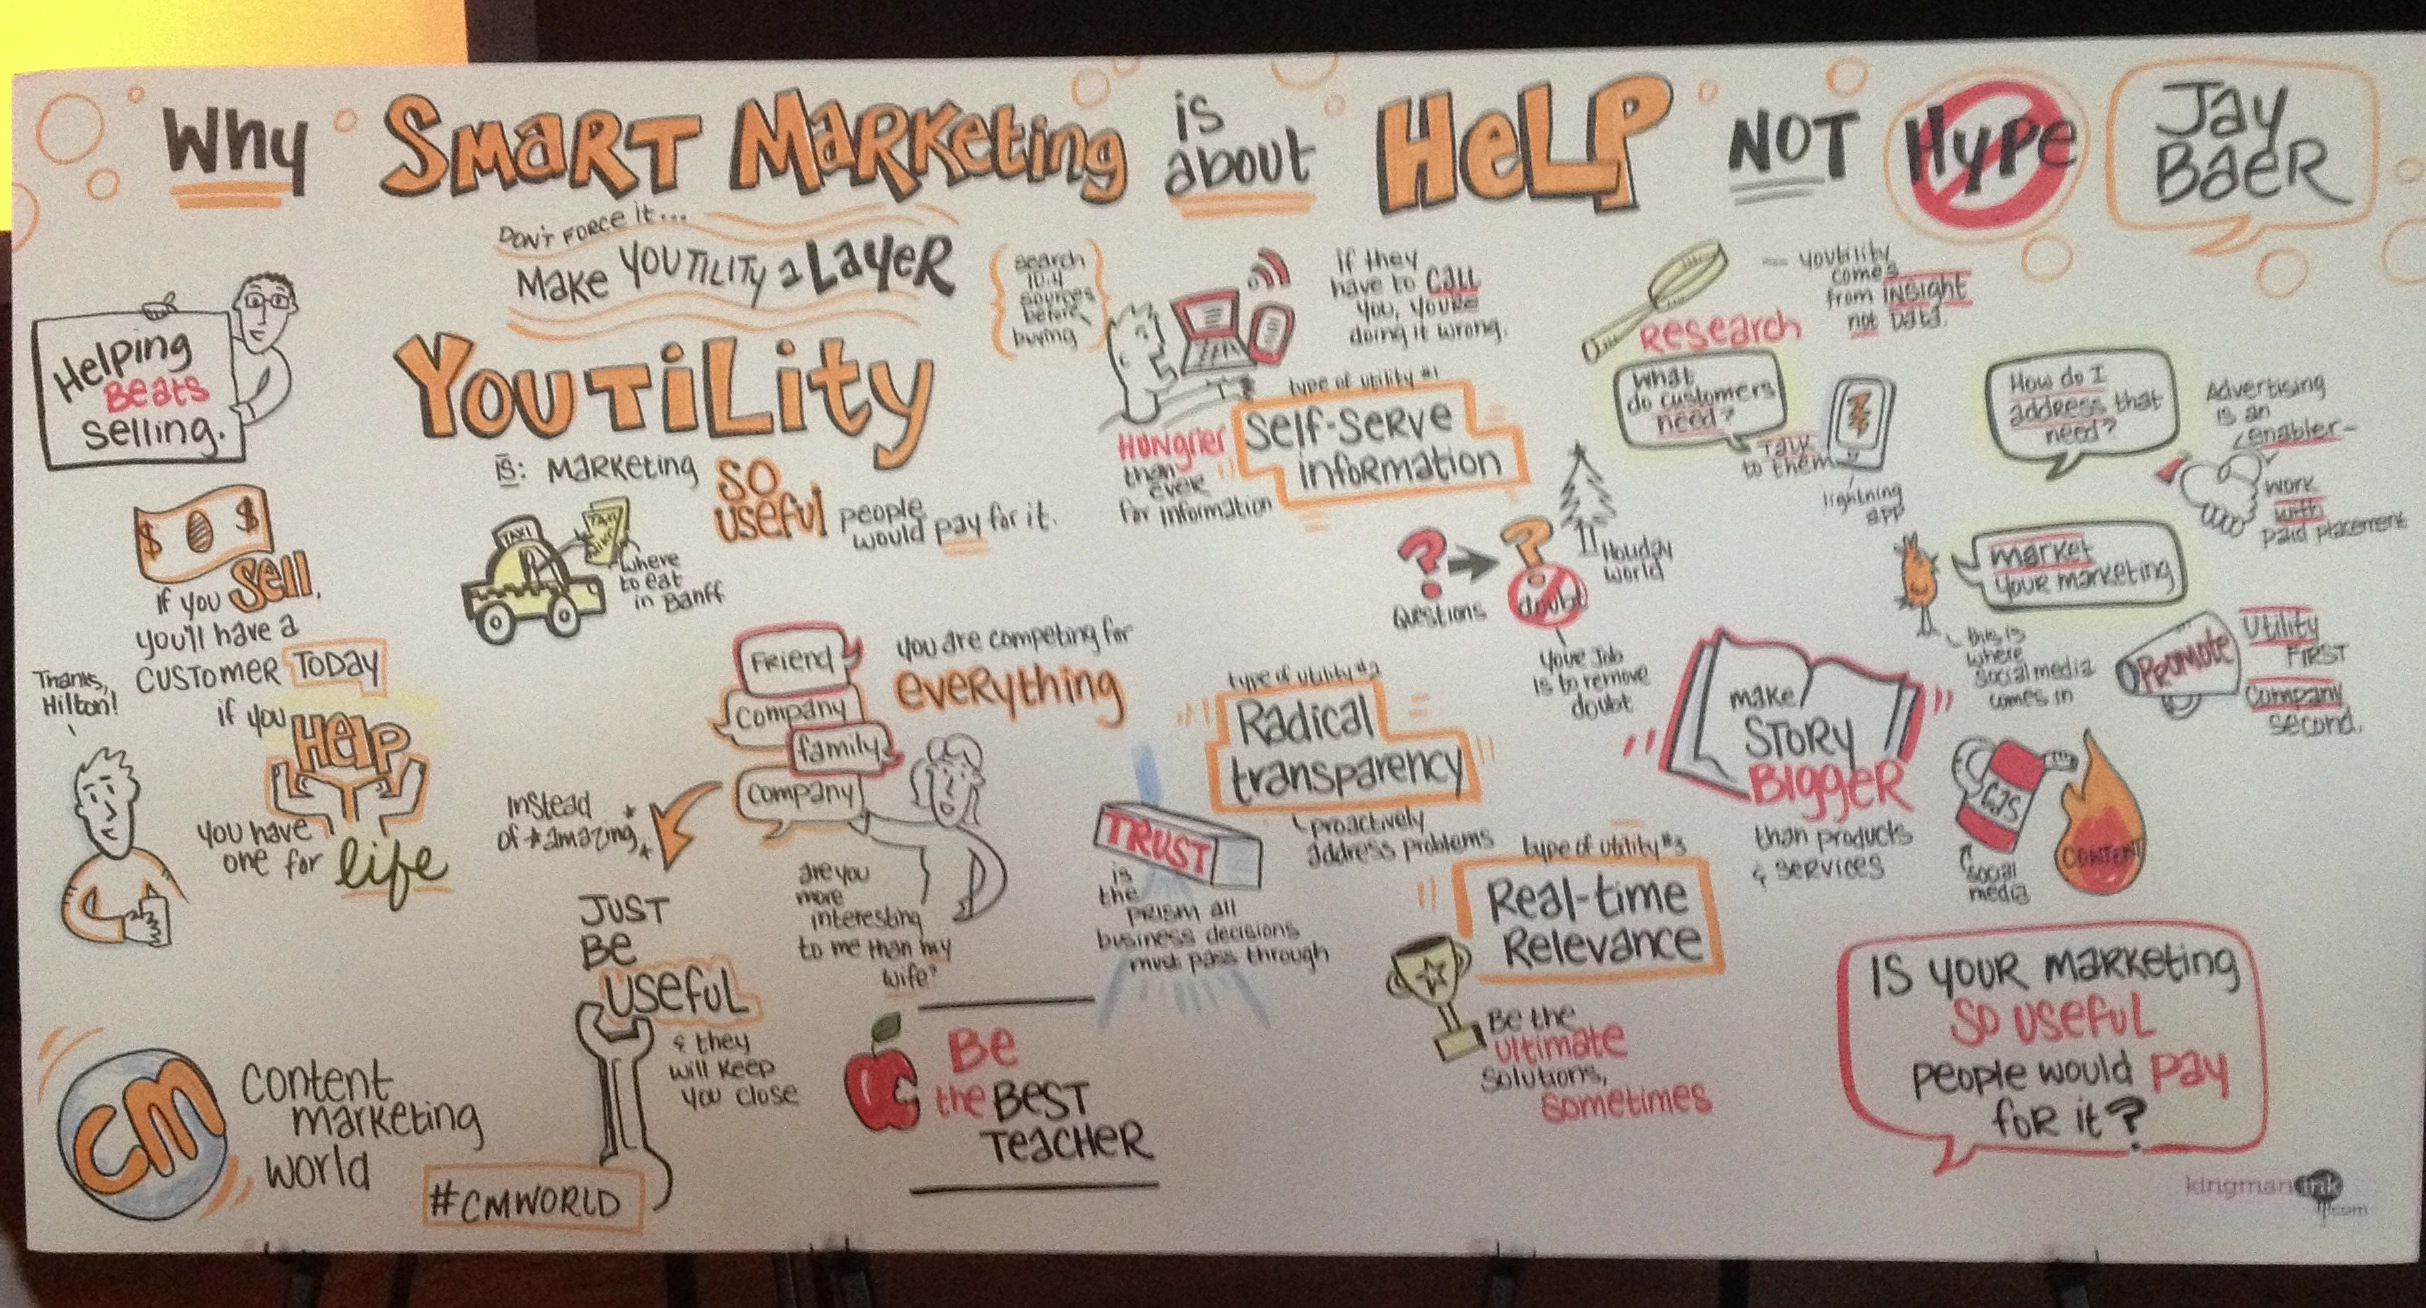 Illustration of Jay Baer's Youtility Presentation